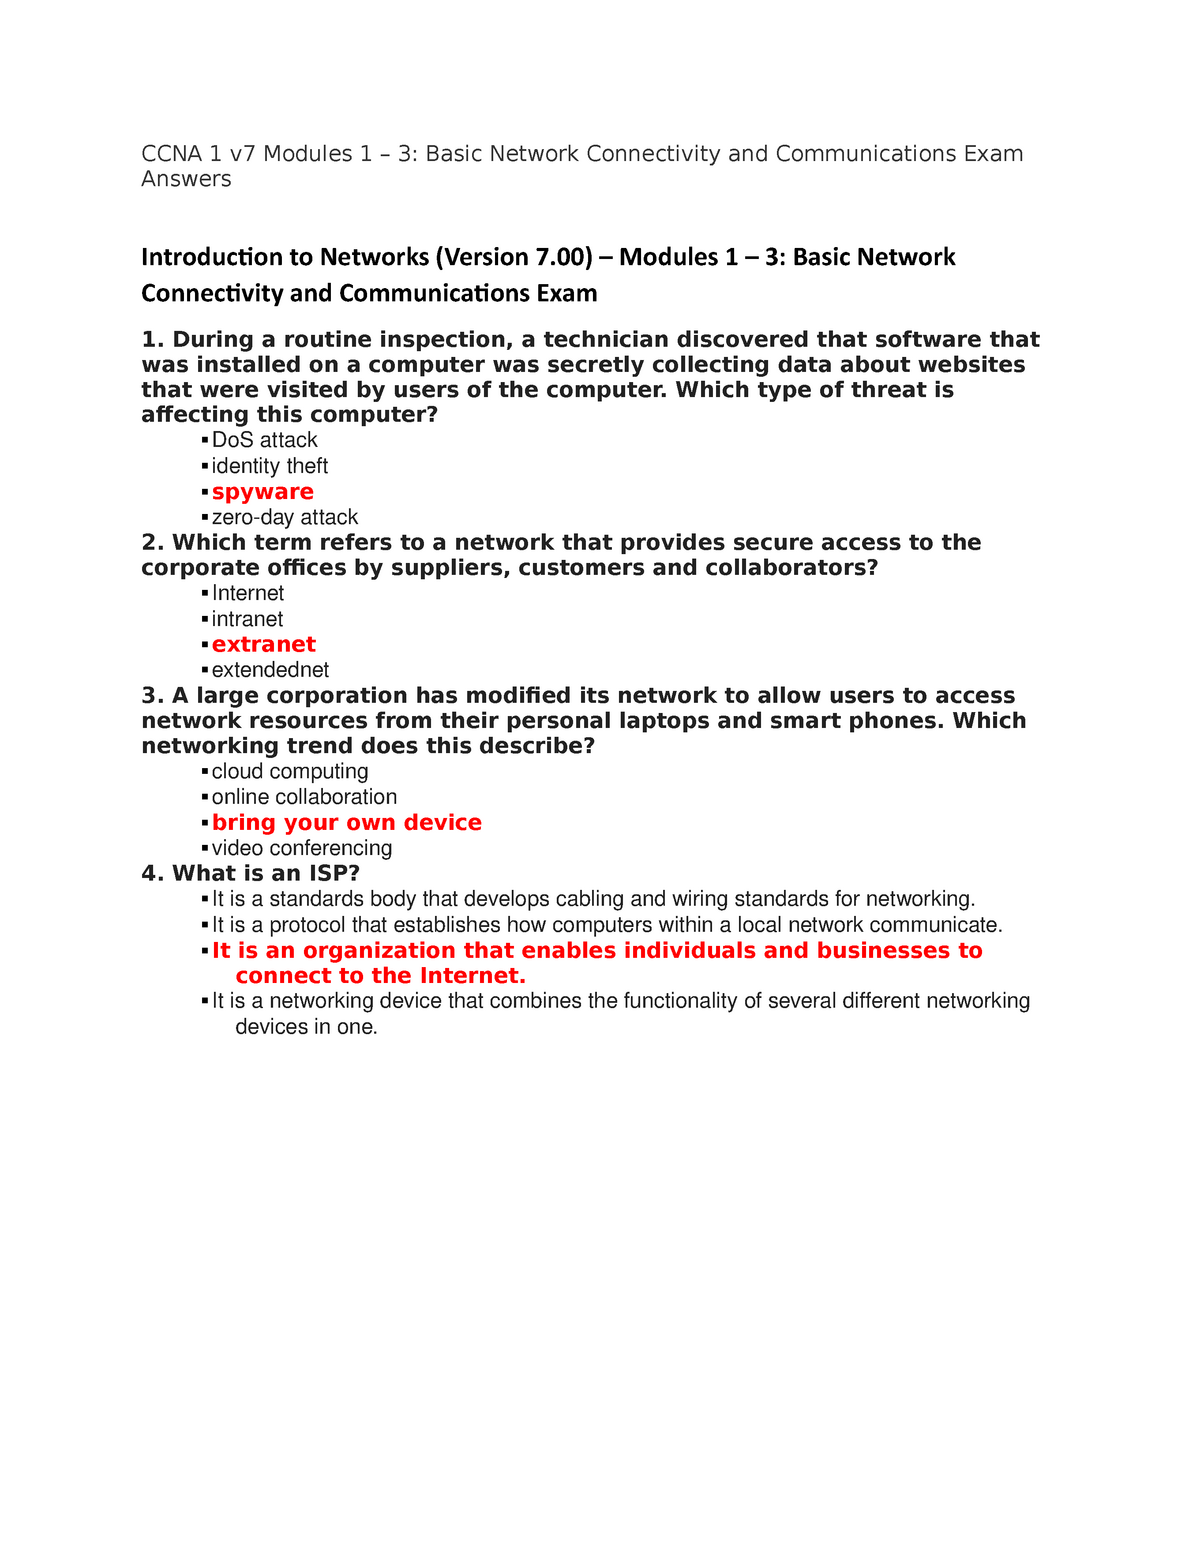 CCNA 1 v7 Modules 1 – 3 Basic Network Connectivity and Communications Exam Answers - CCNA 1 v7 - Studocu